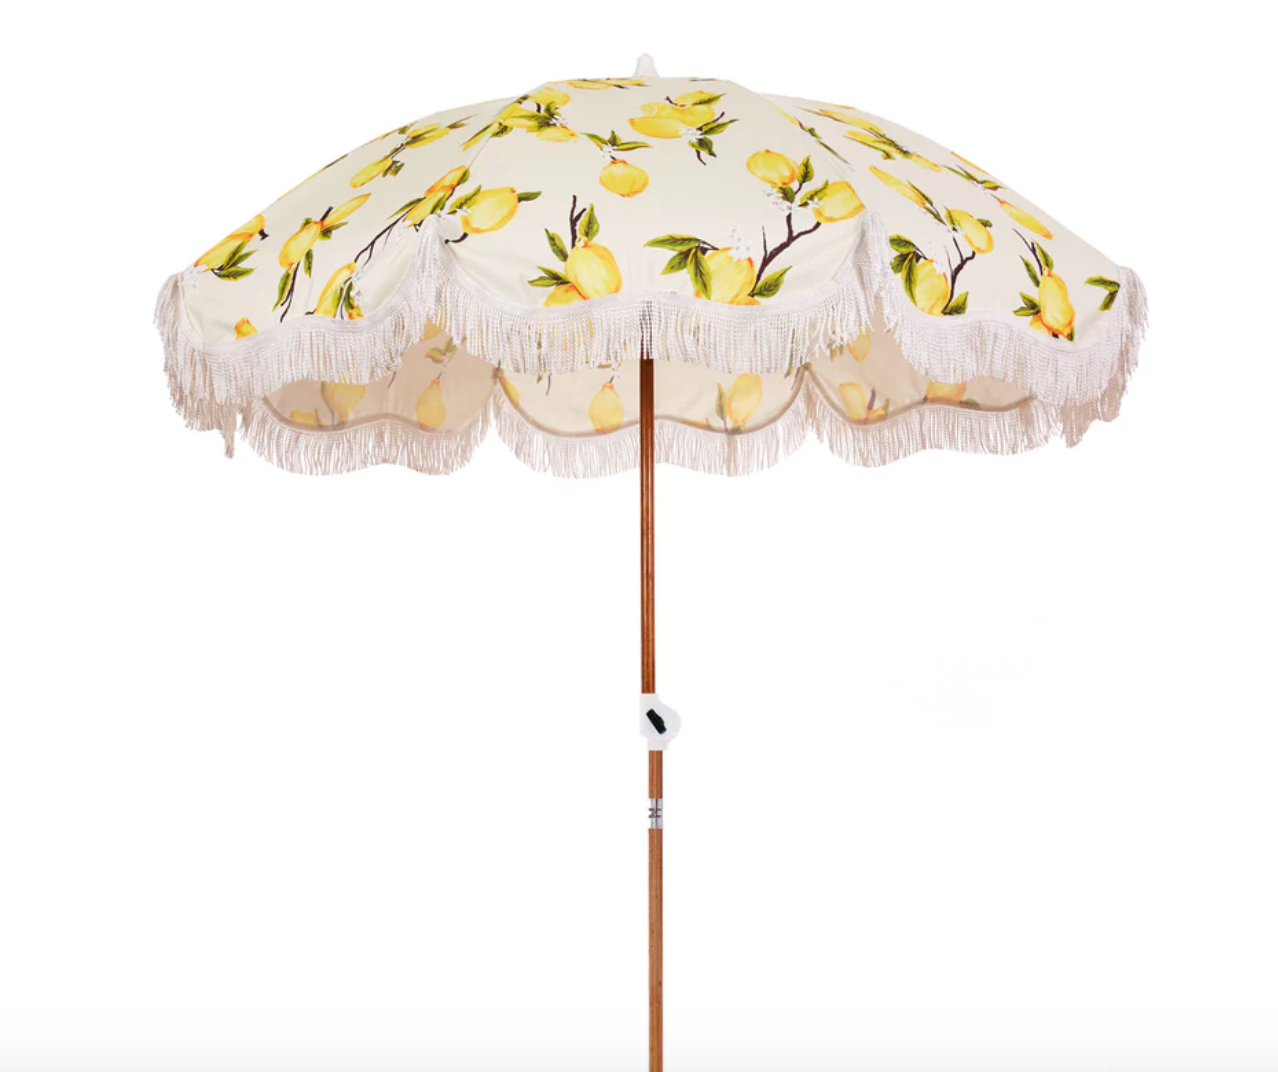 Sunset Shades: Beach Umbrella - Premium Style, Portable Size - White Background